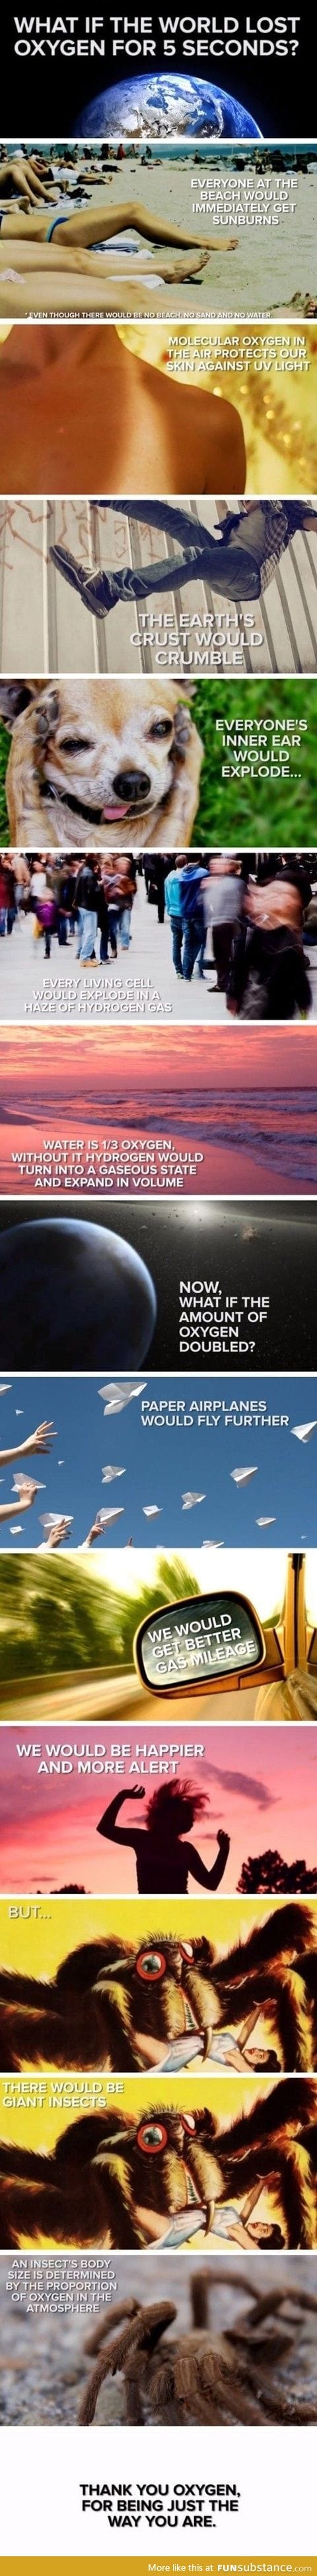 Oxygen changes